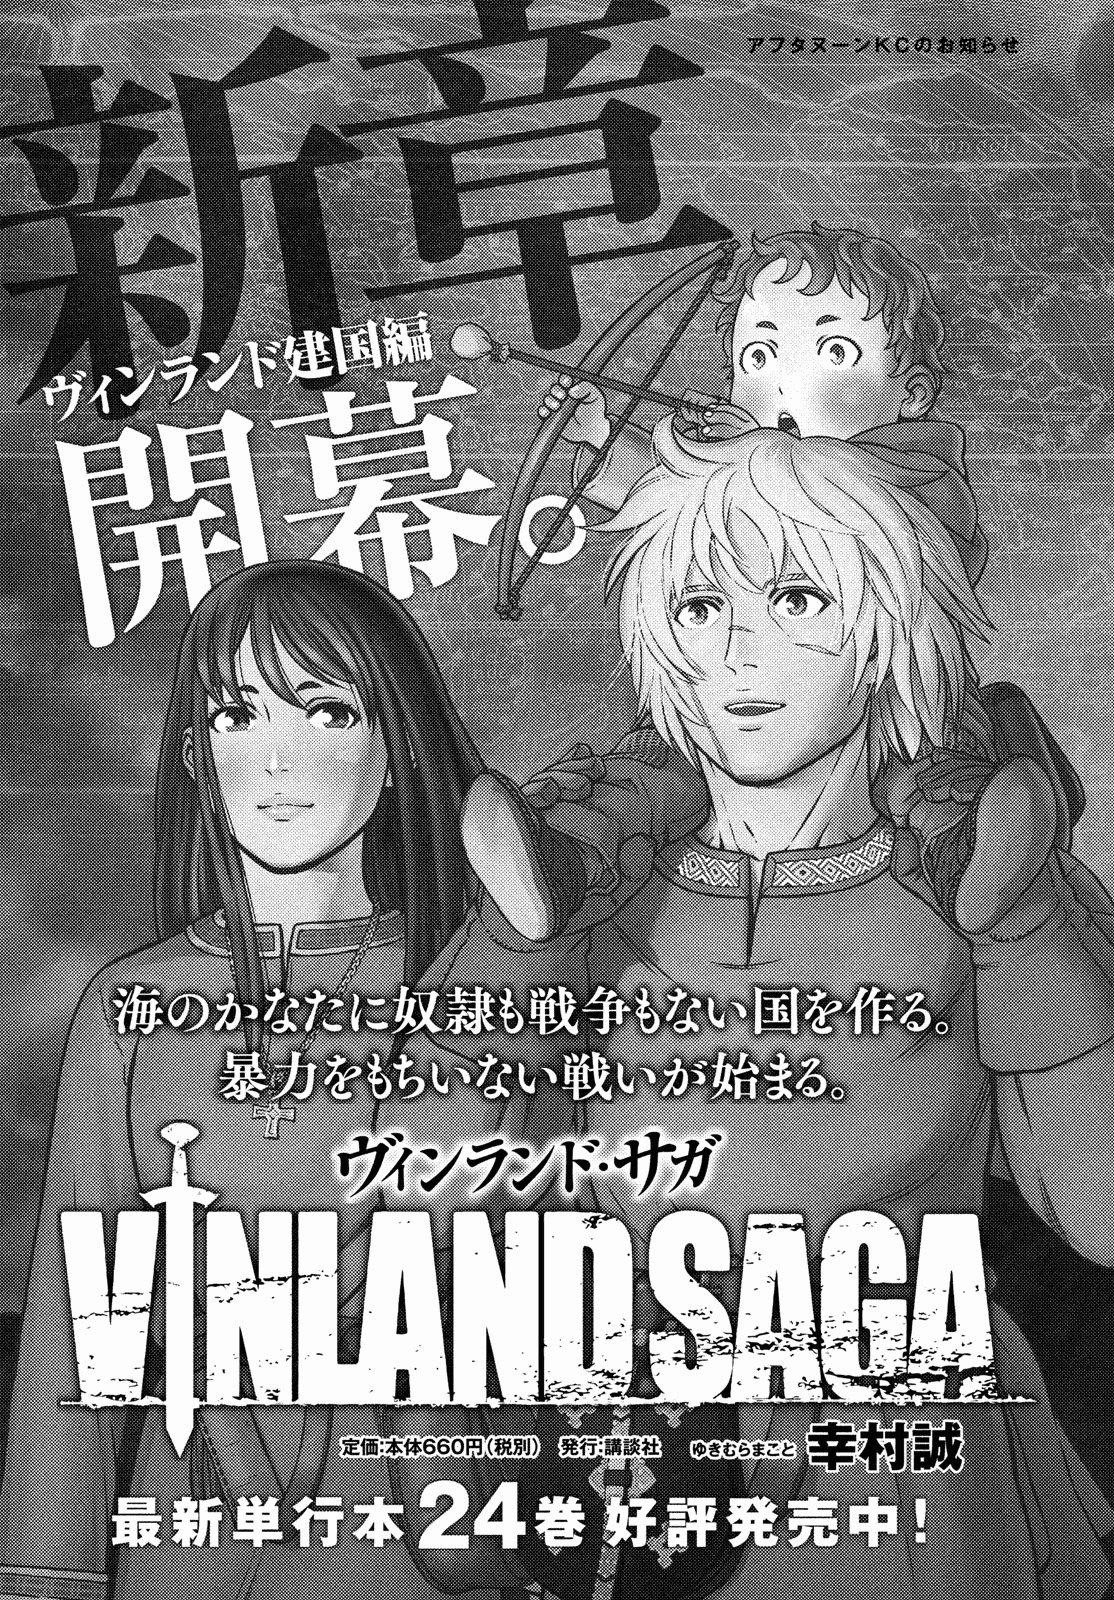 Vinland Saga - episode 179 - 20